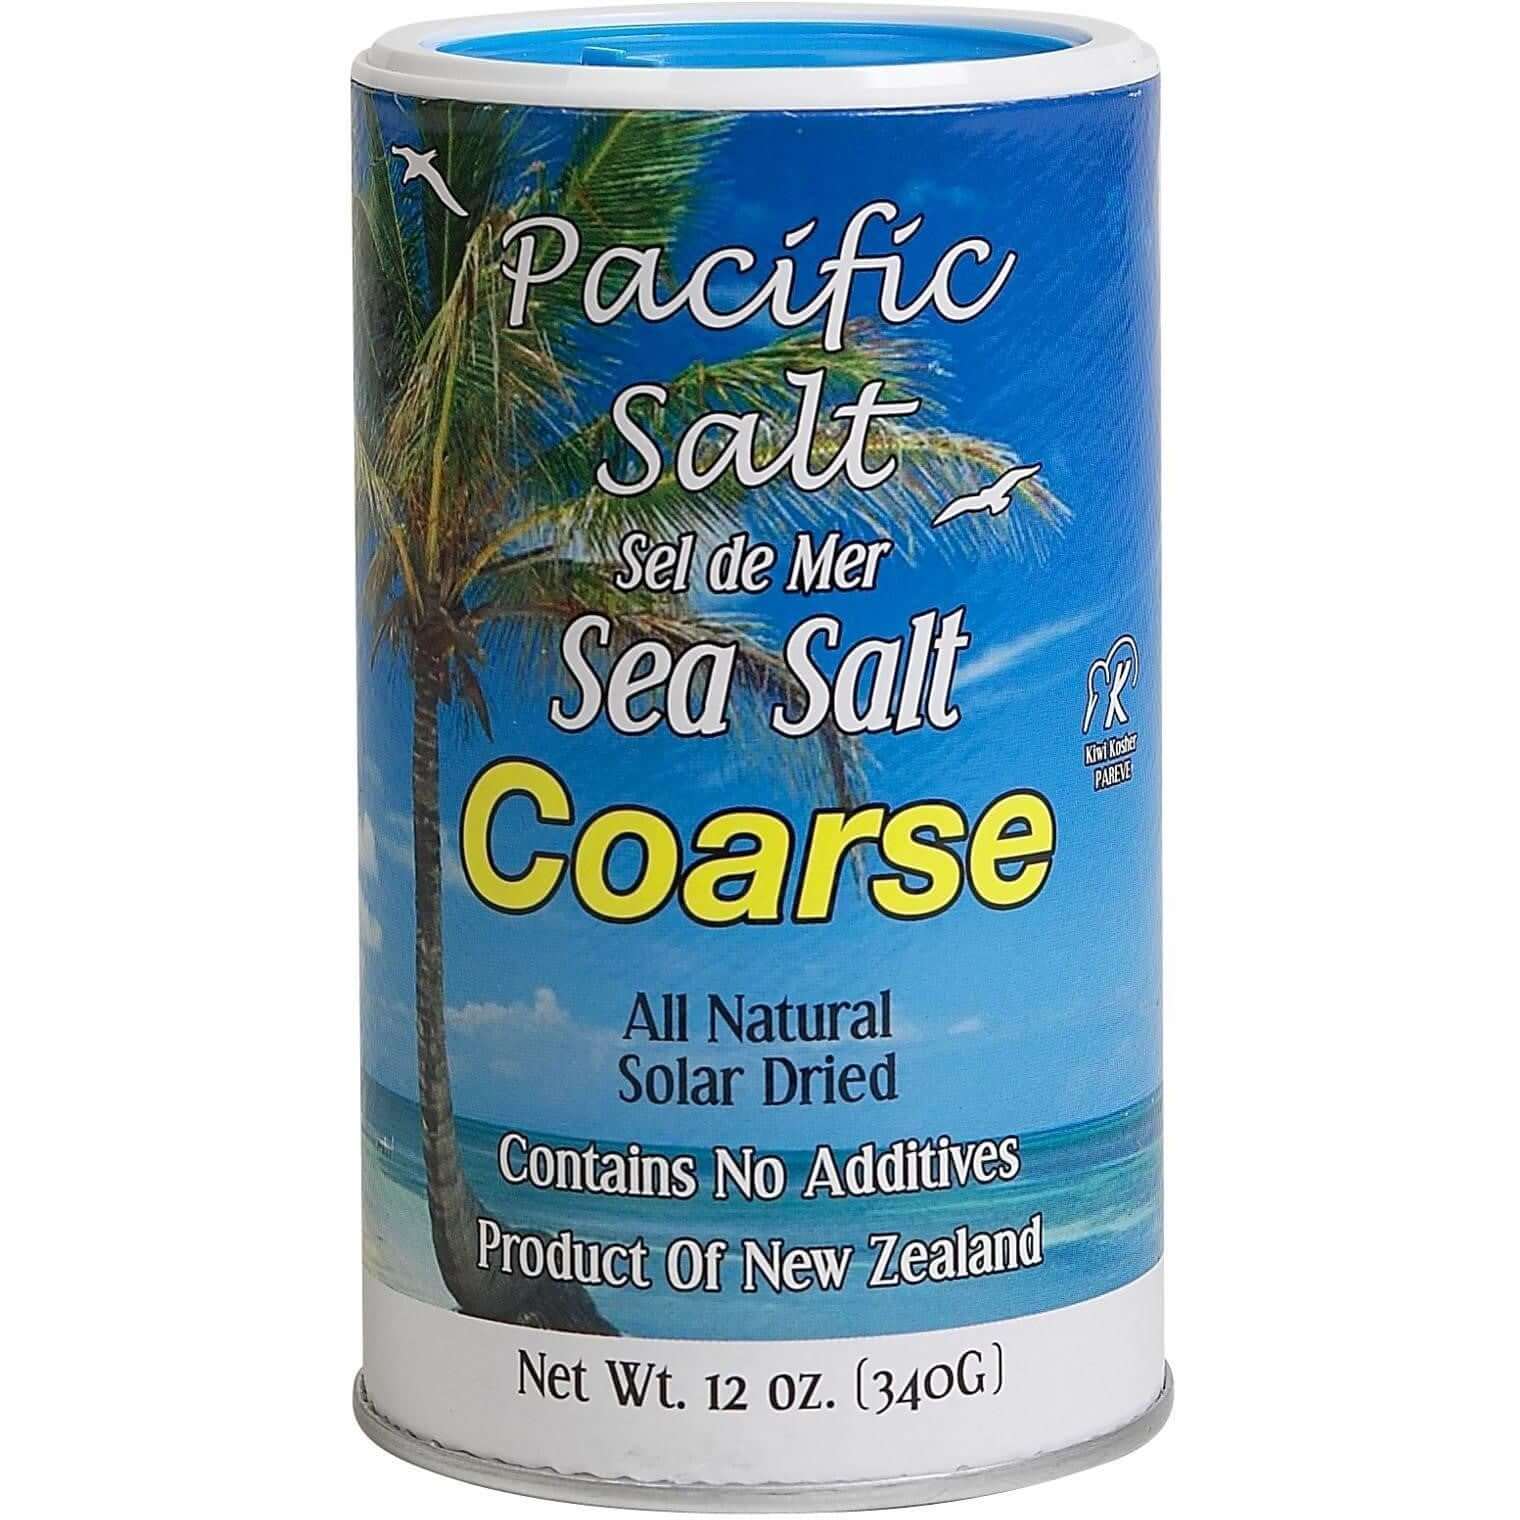 Health Food Myths: Sea Salt